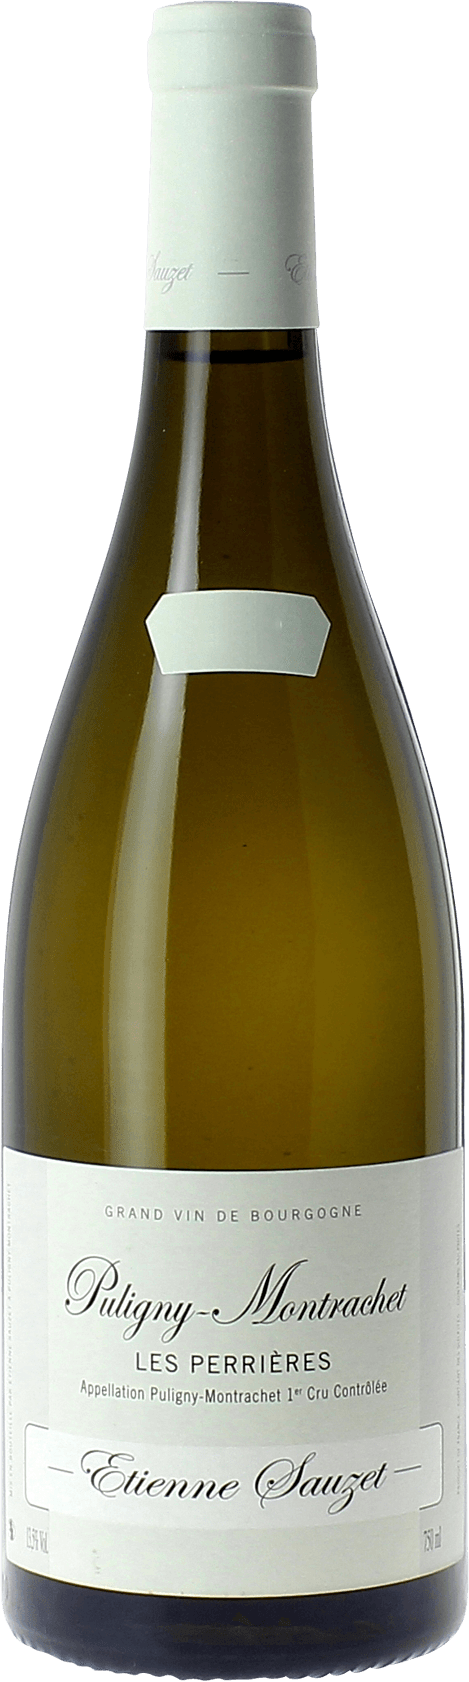 Puligny montrachet 1er cru perrires 2016 Domaine SAUZET, Bourgogne blanc